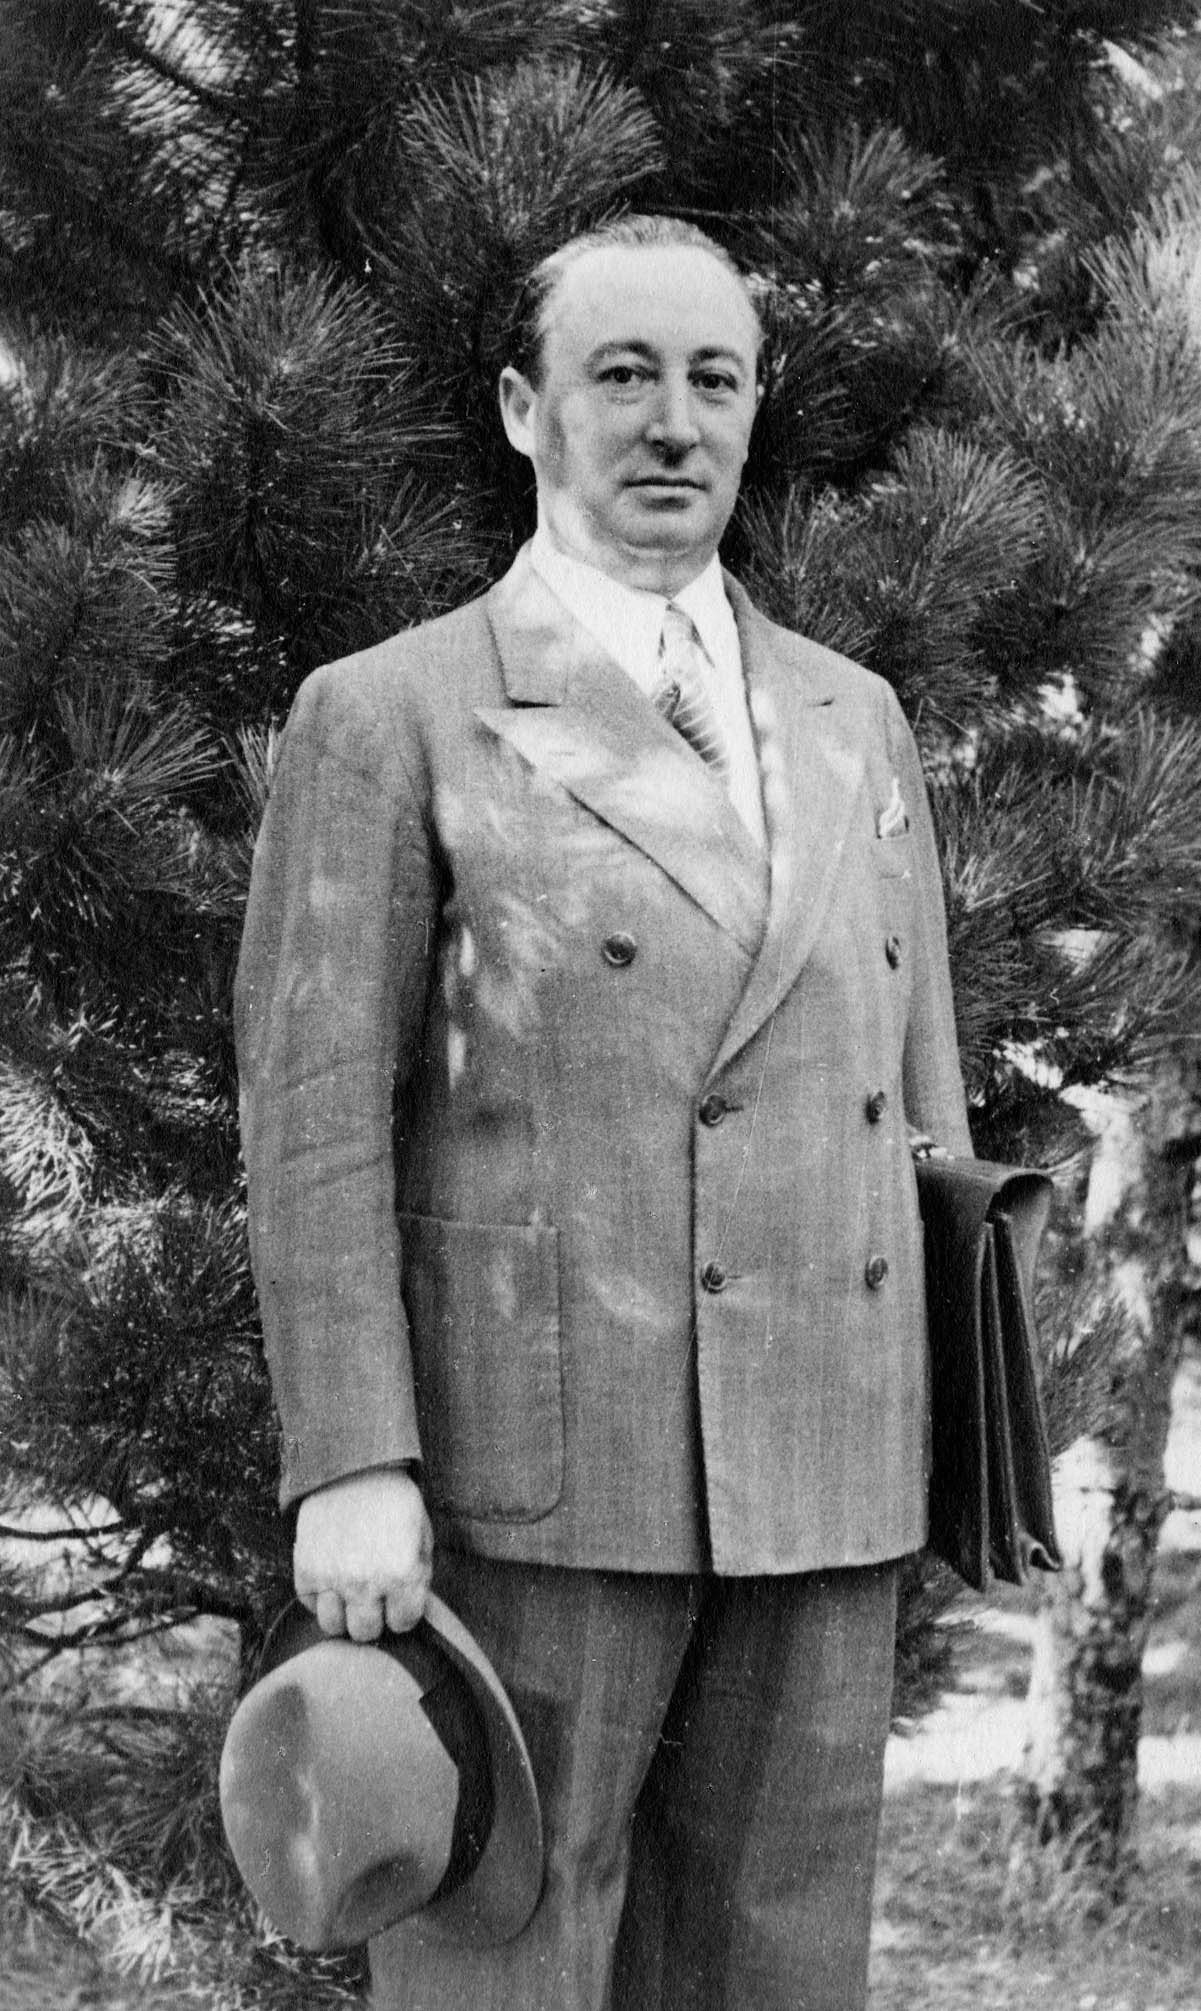  Théodore Leveau à Ankara. Cl. anonyme. 1941.  © Fonds Théodore Leveau. SIAF/CAPa/Archives d’architecture du XXe siècle. 149 Ifa 04